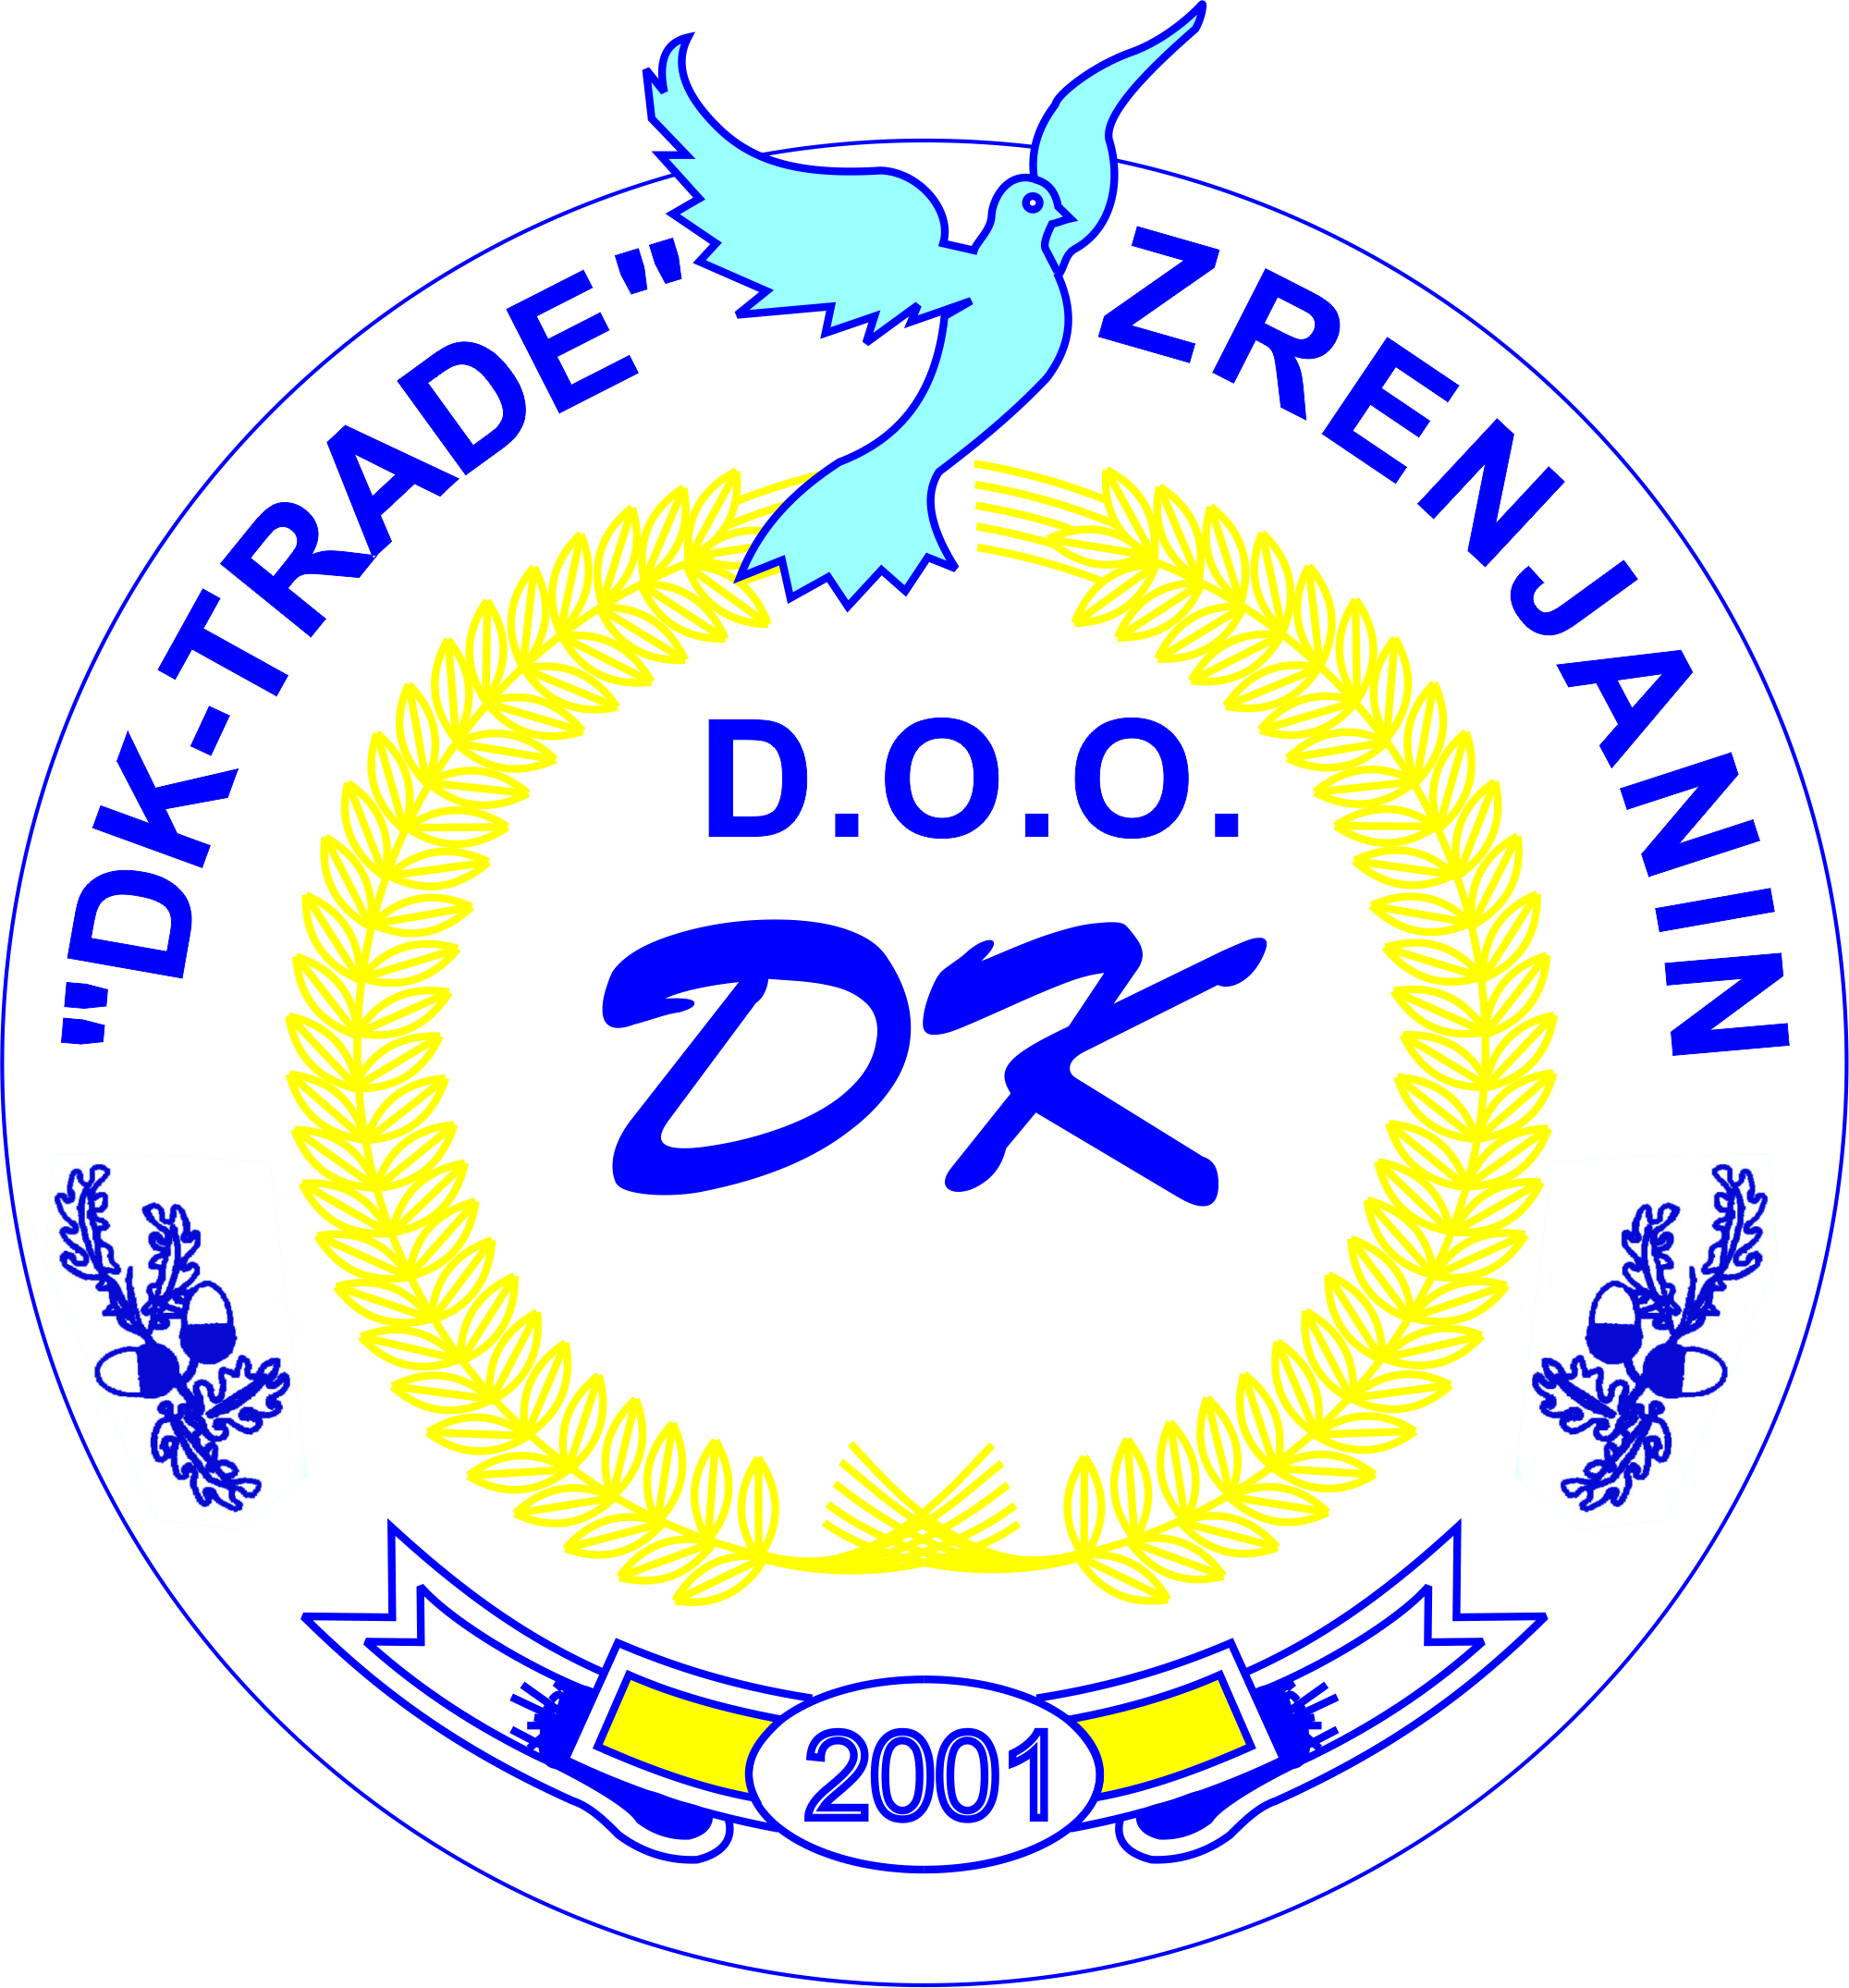 DK Trade doo